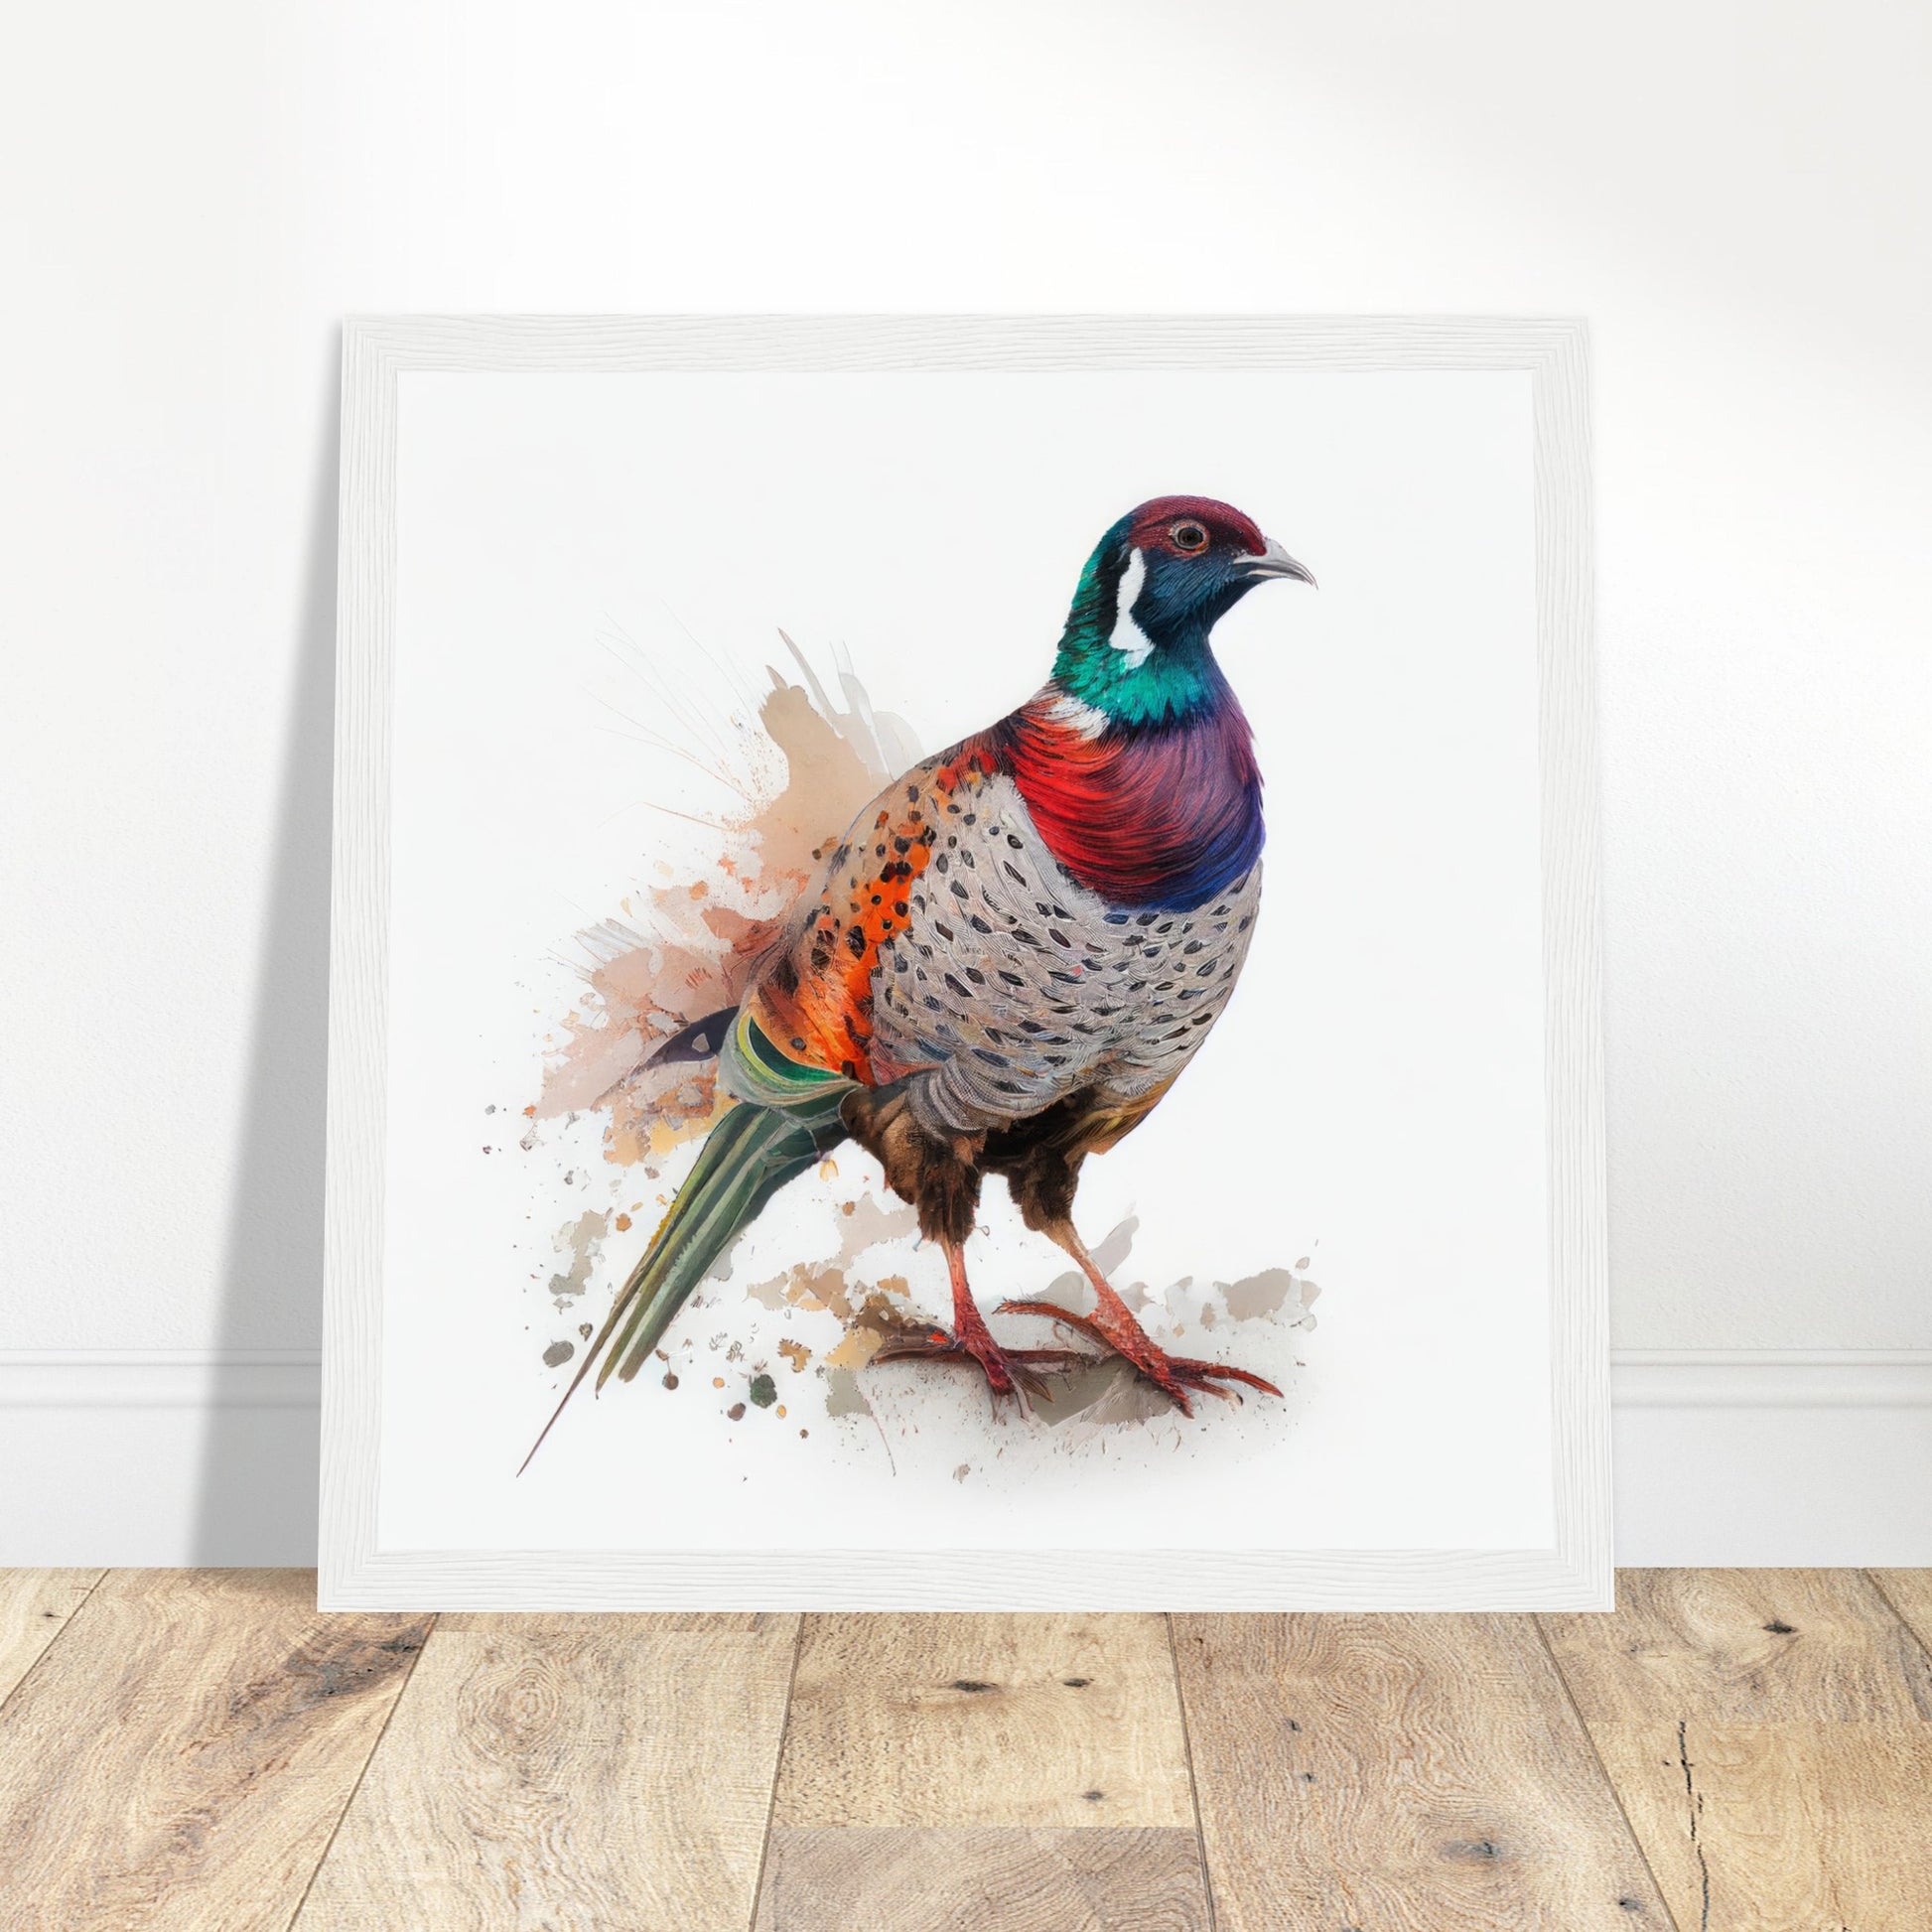 Pheasant Artwork - Print Room Ltd White frame 50x50 cm / 20x20"